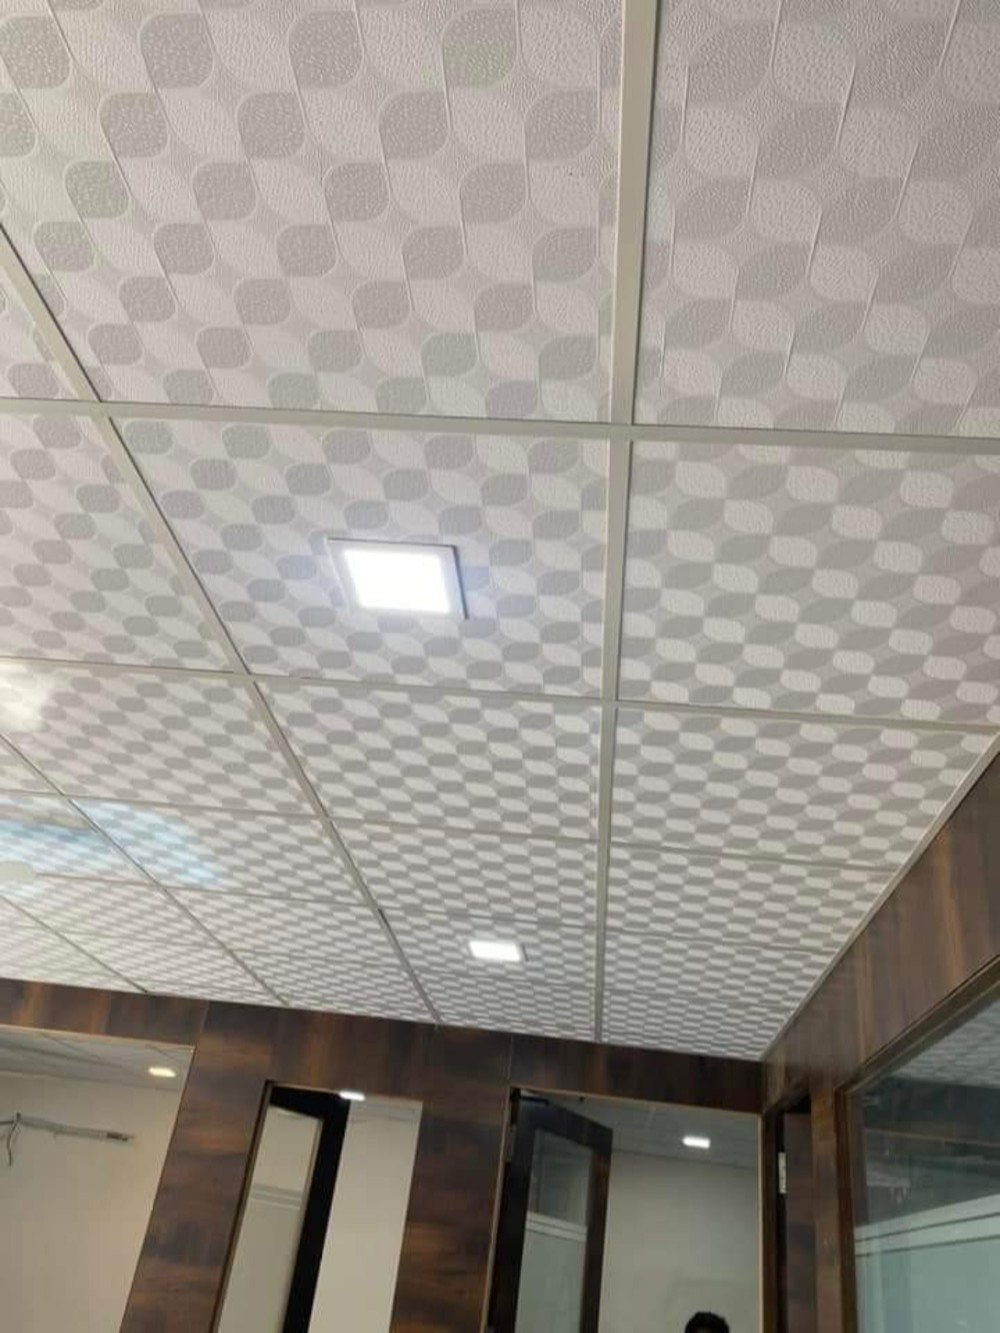 Ceiling Grid Tiles